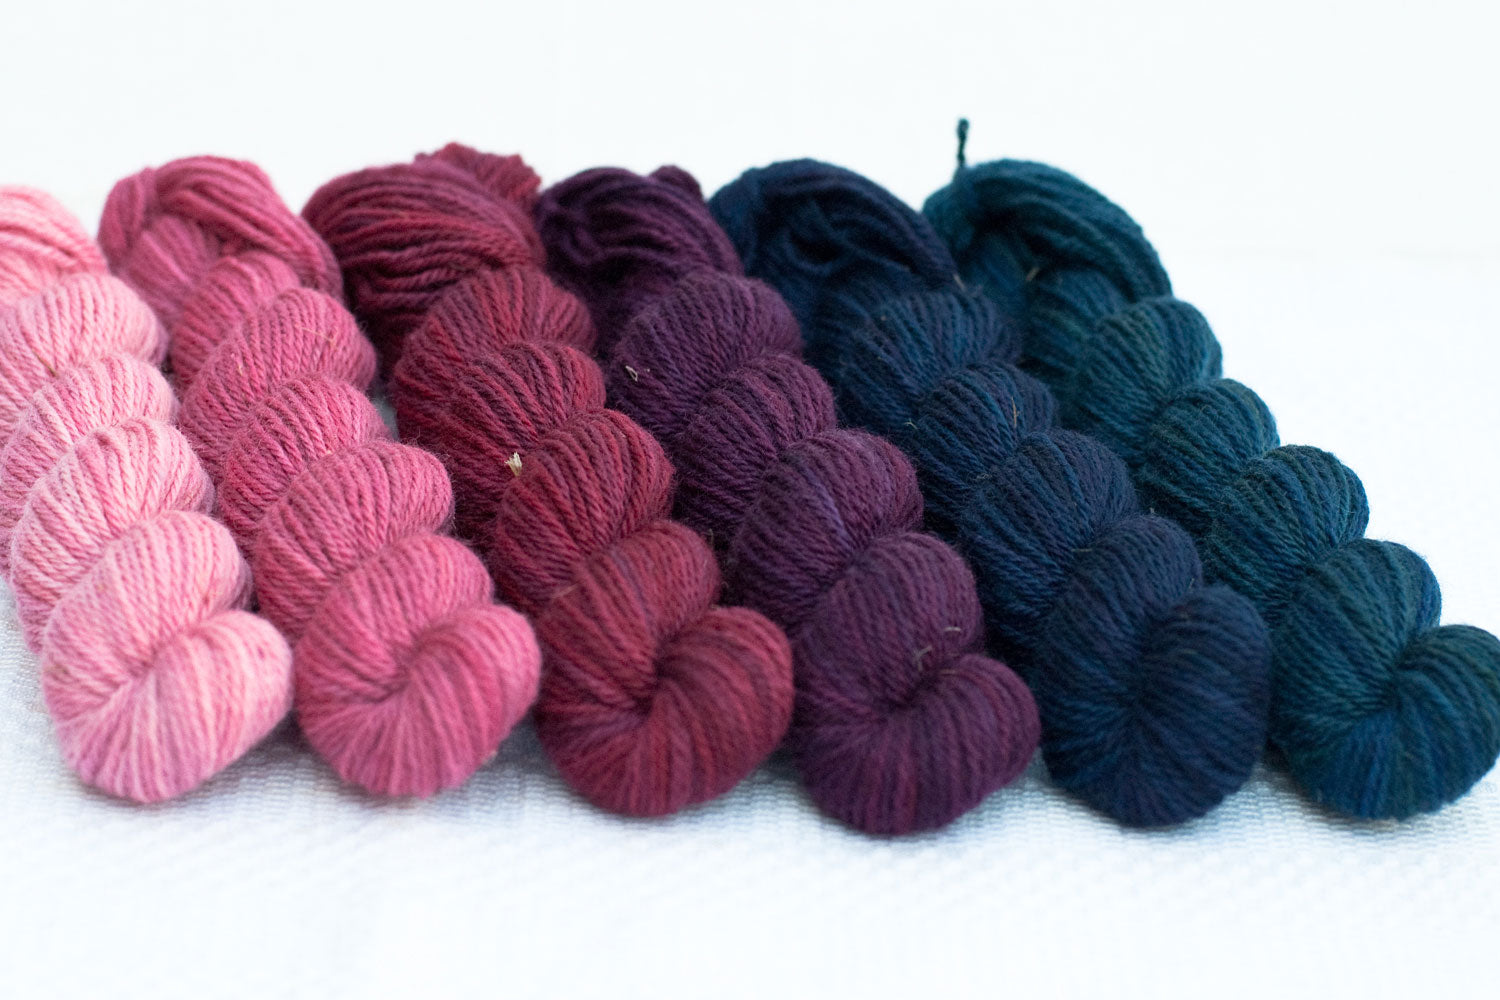 Hand-dyed yarn, knitting patterns, kits - Sweet Paprika Designs